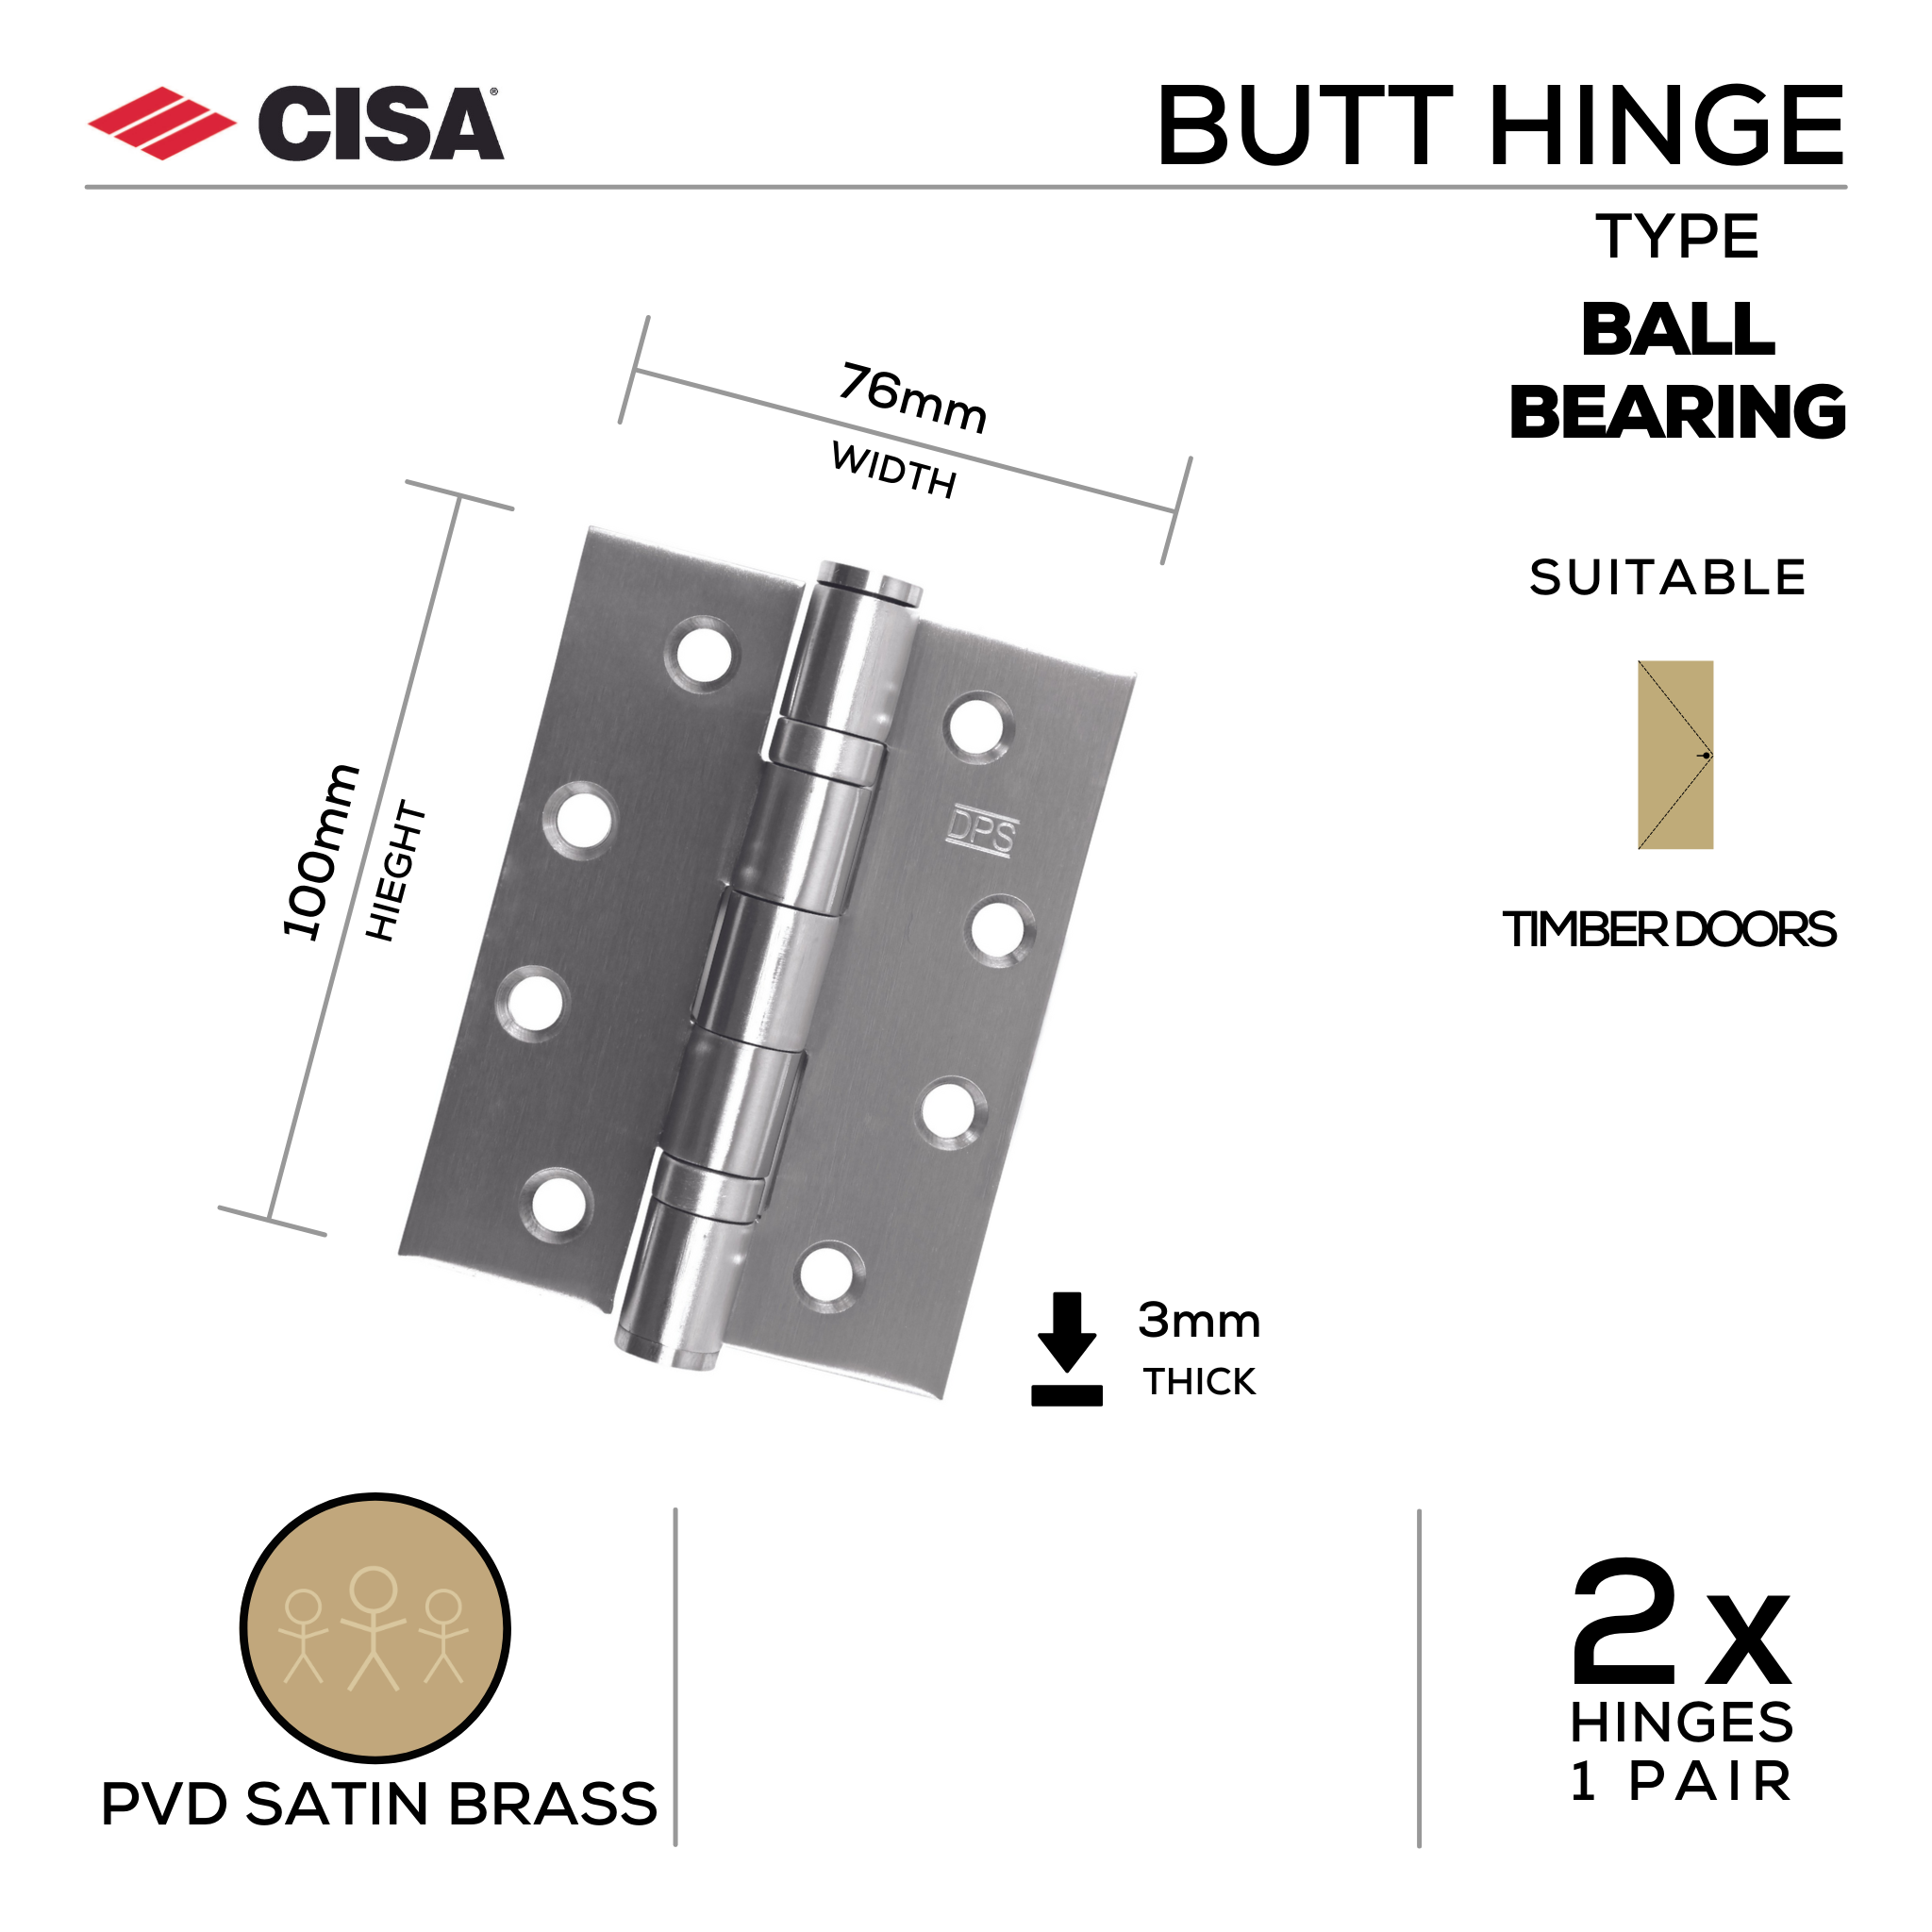 FH76X3B-BR, Butt Hinge, Double Ball Bearing, 2 x Hinges (1 Pair), 100mm (h) x 76mm (w) x 3mm (t), PVD Satin Brass, CISA